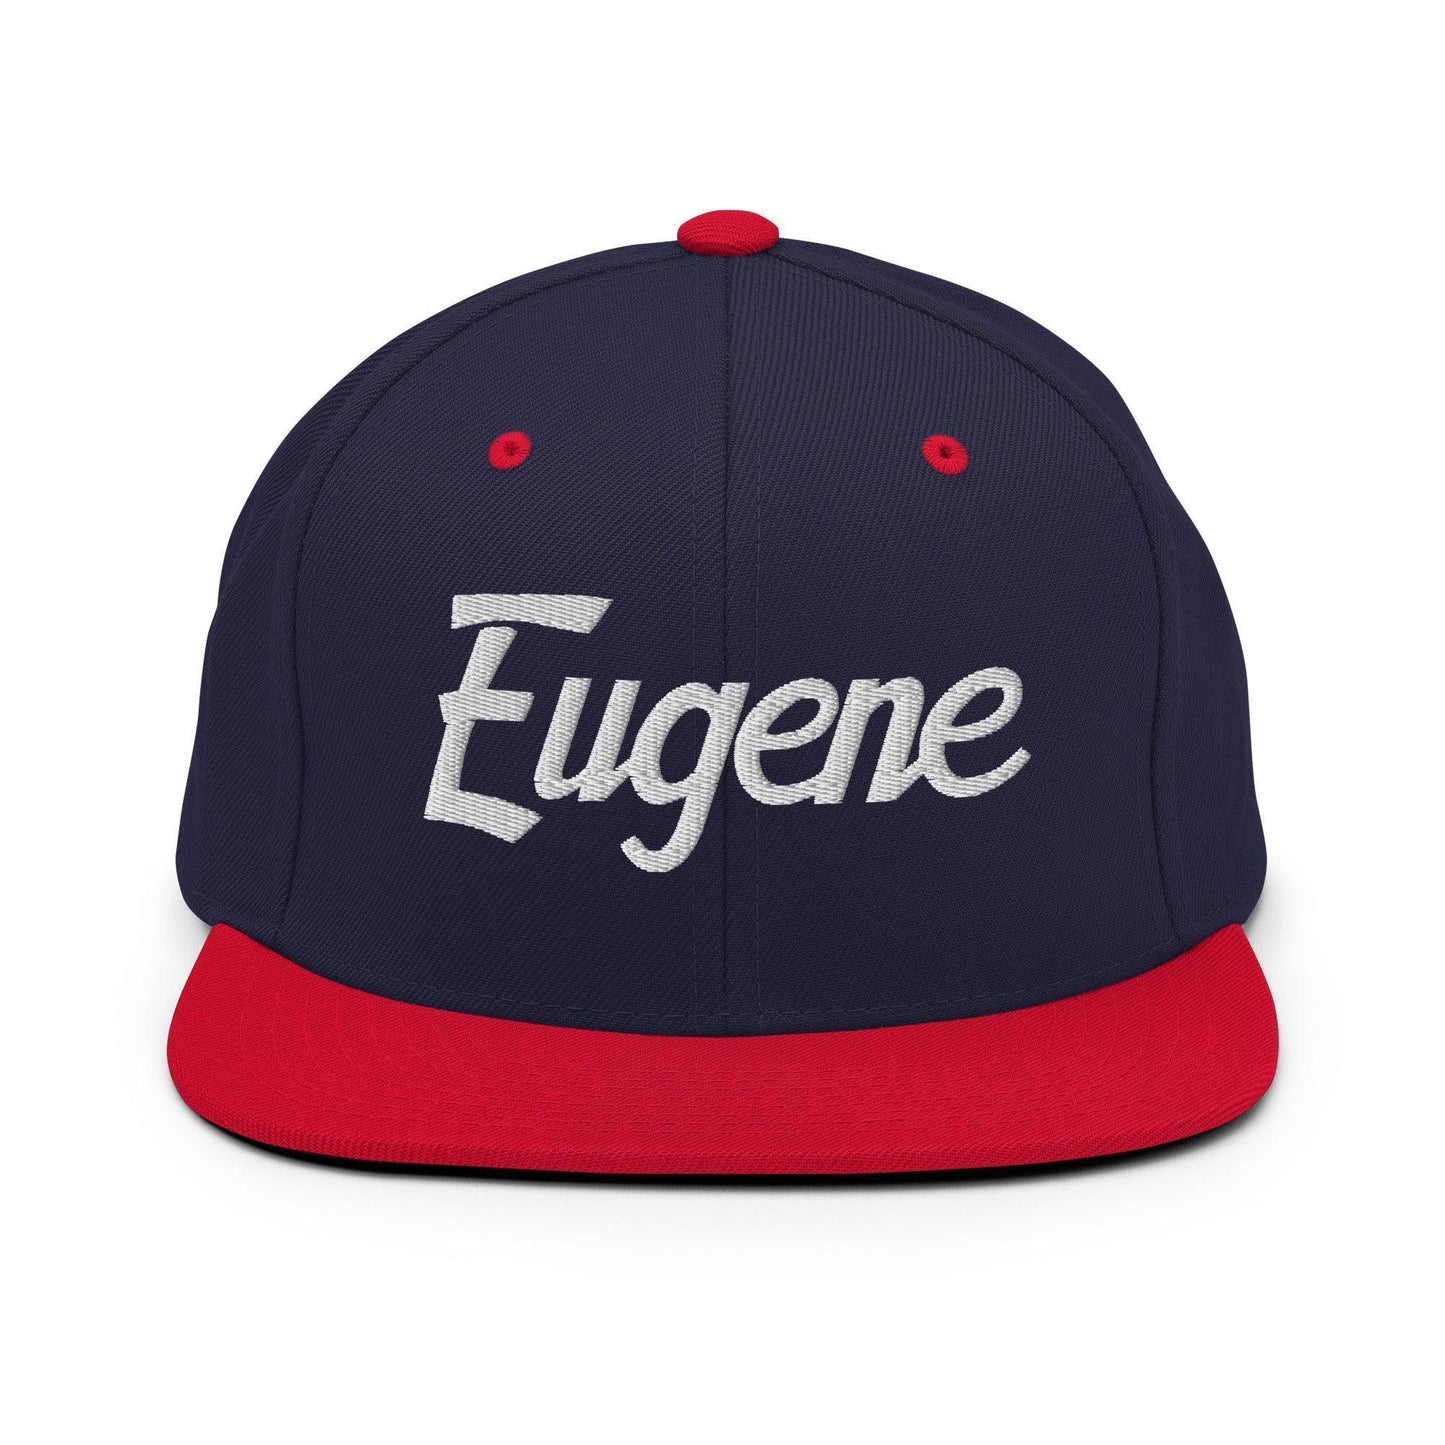 Eugene Script Snapback Hat Navy/ Red